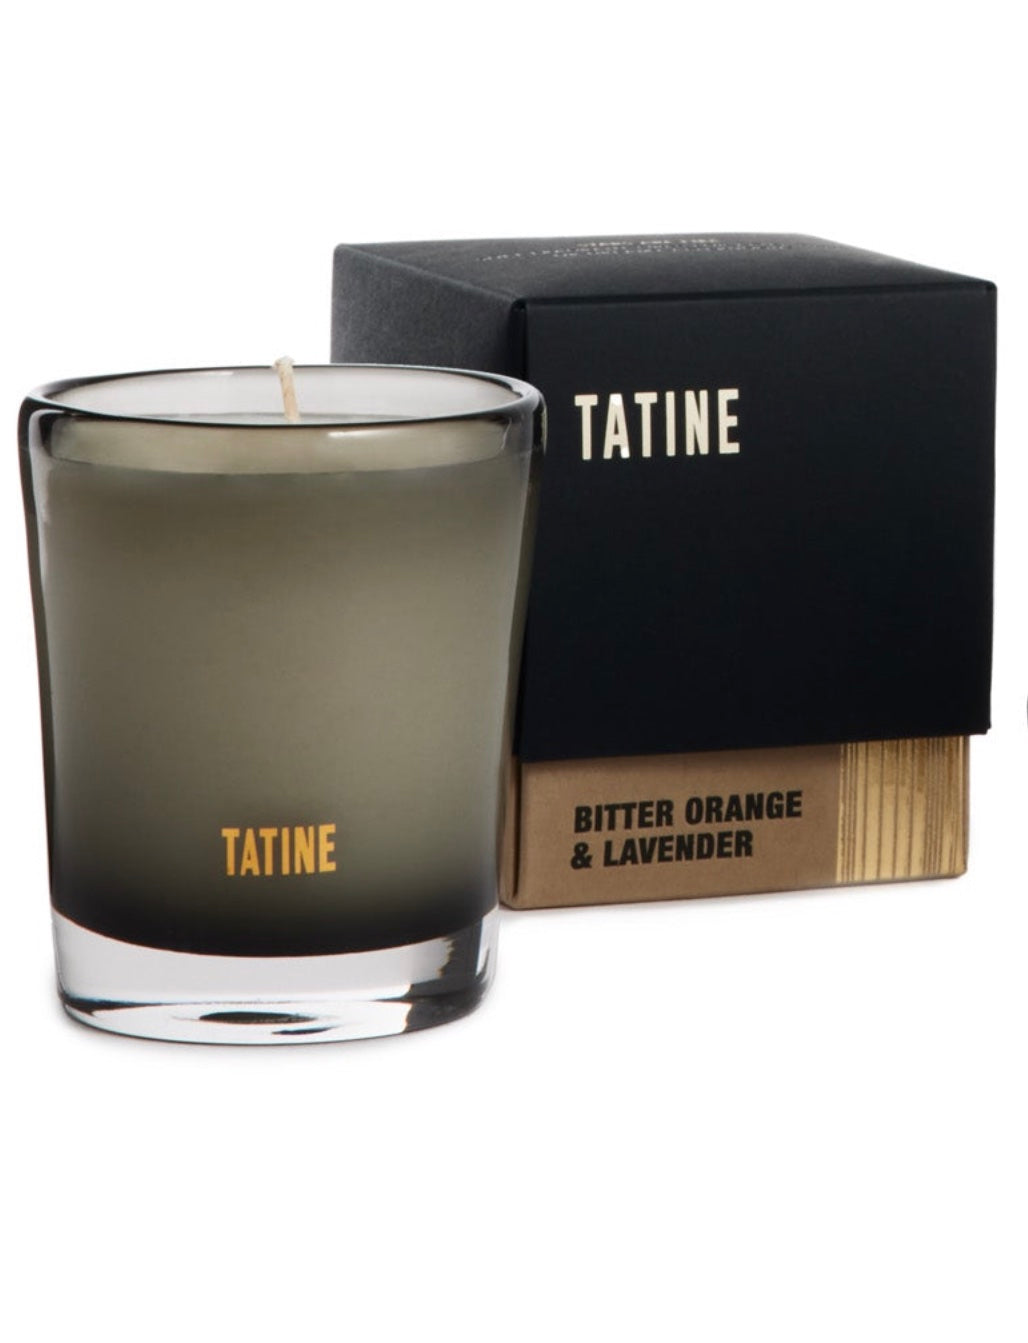 Tatine Bitter Orange and Lavender Candle